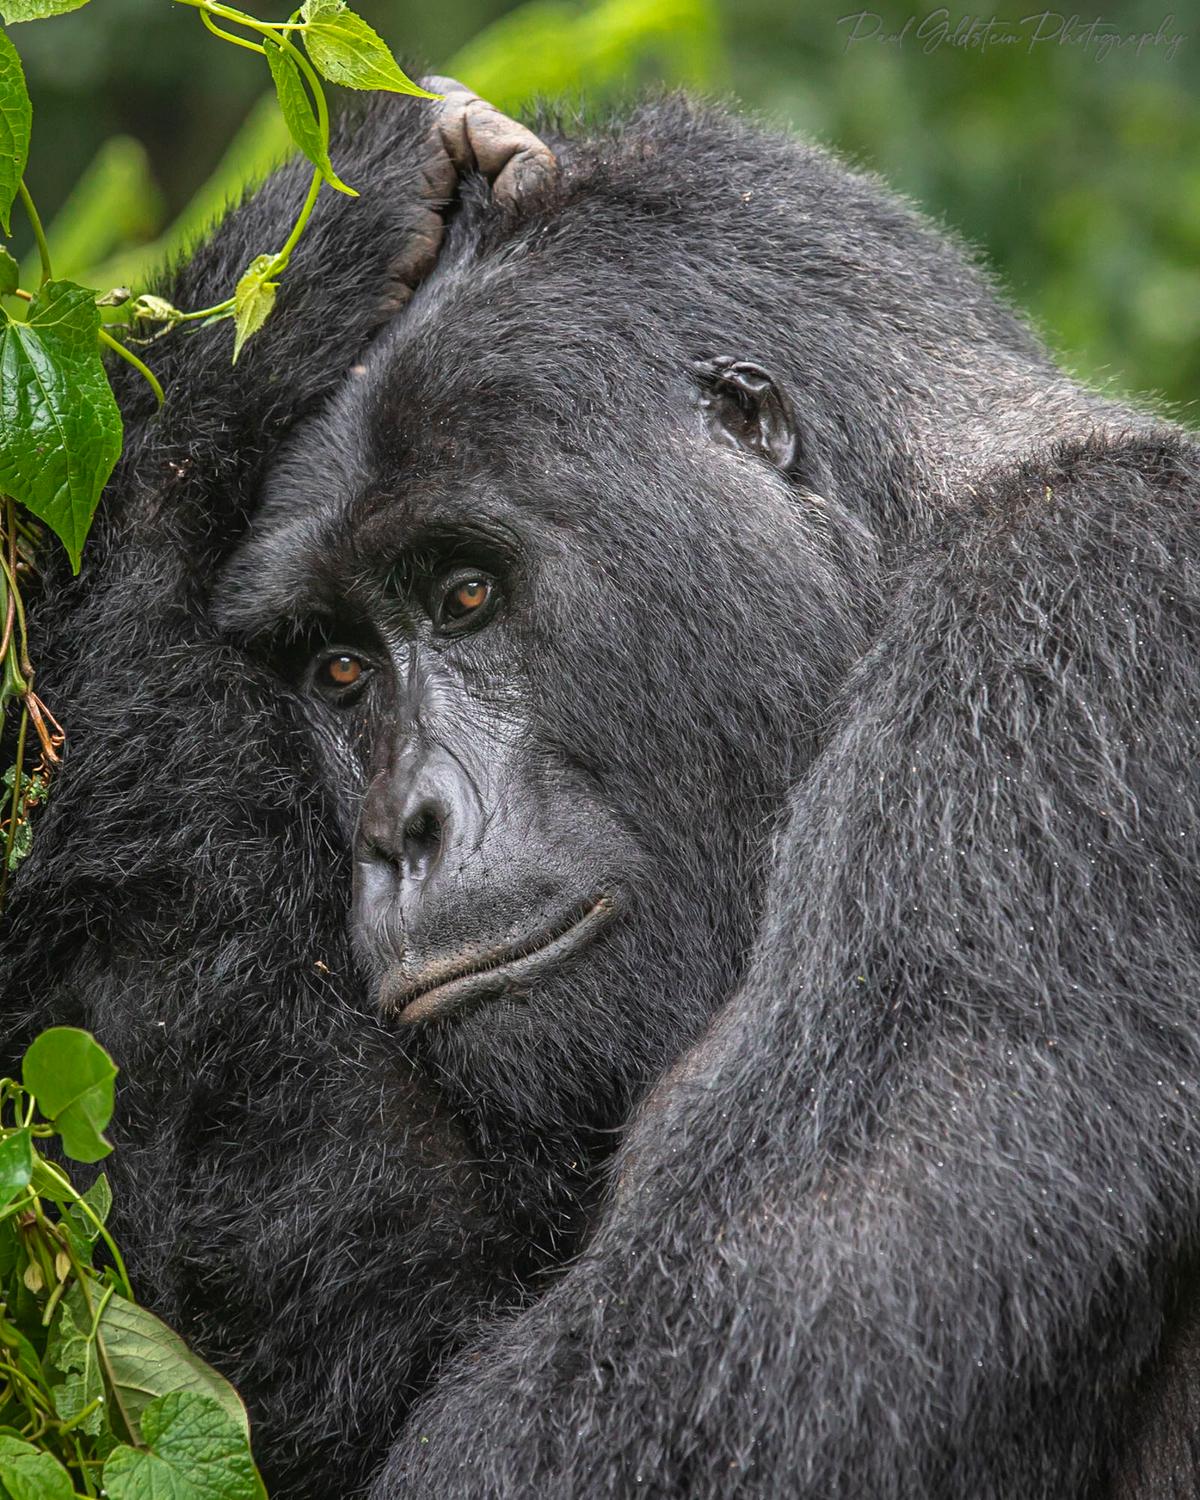 A gorilla. (Courtesy of <a href="https://www.instagram.com/paulsgoldstein/">Paul Goldstein</a>)